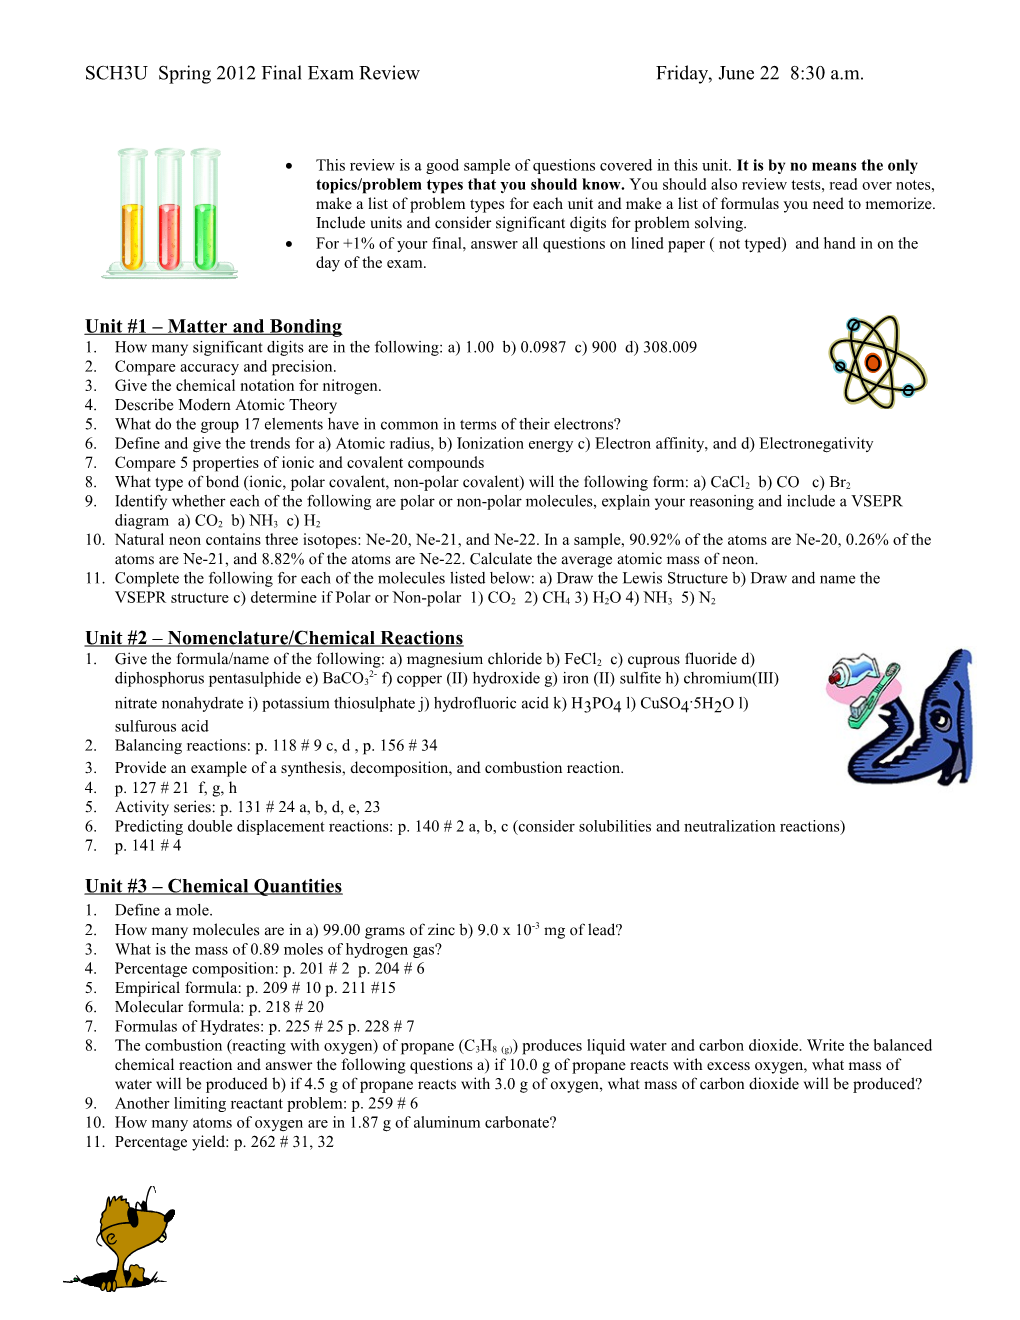 SCH 3U Chemistry 11 - Exam Review